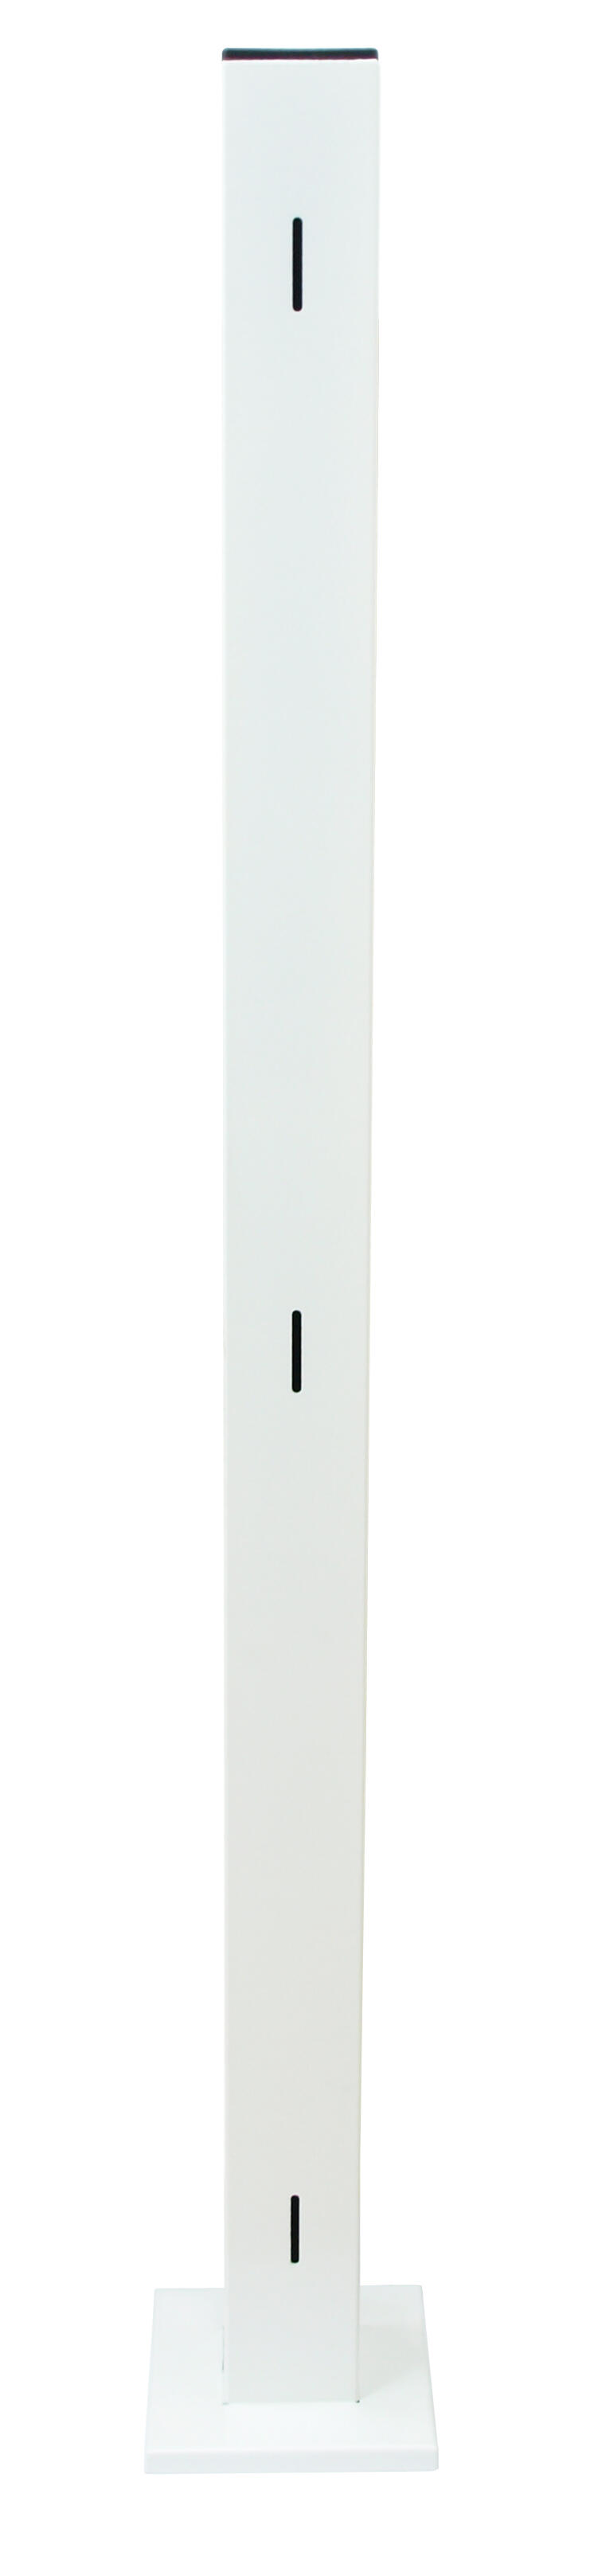 Poste de alineación acero galvanizado blanco 50x13 cm